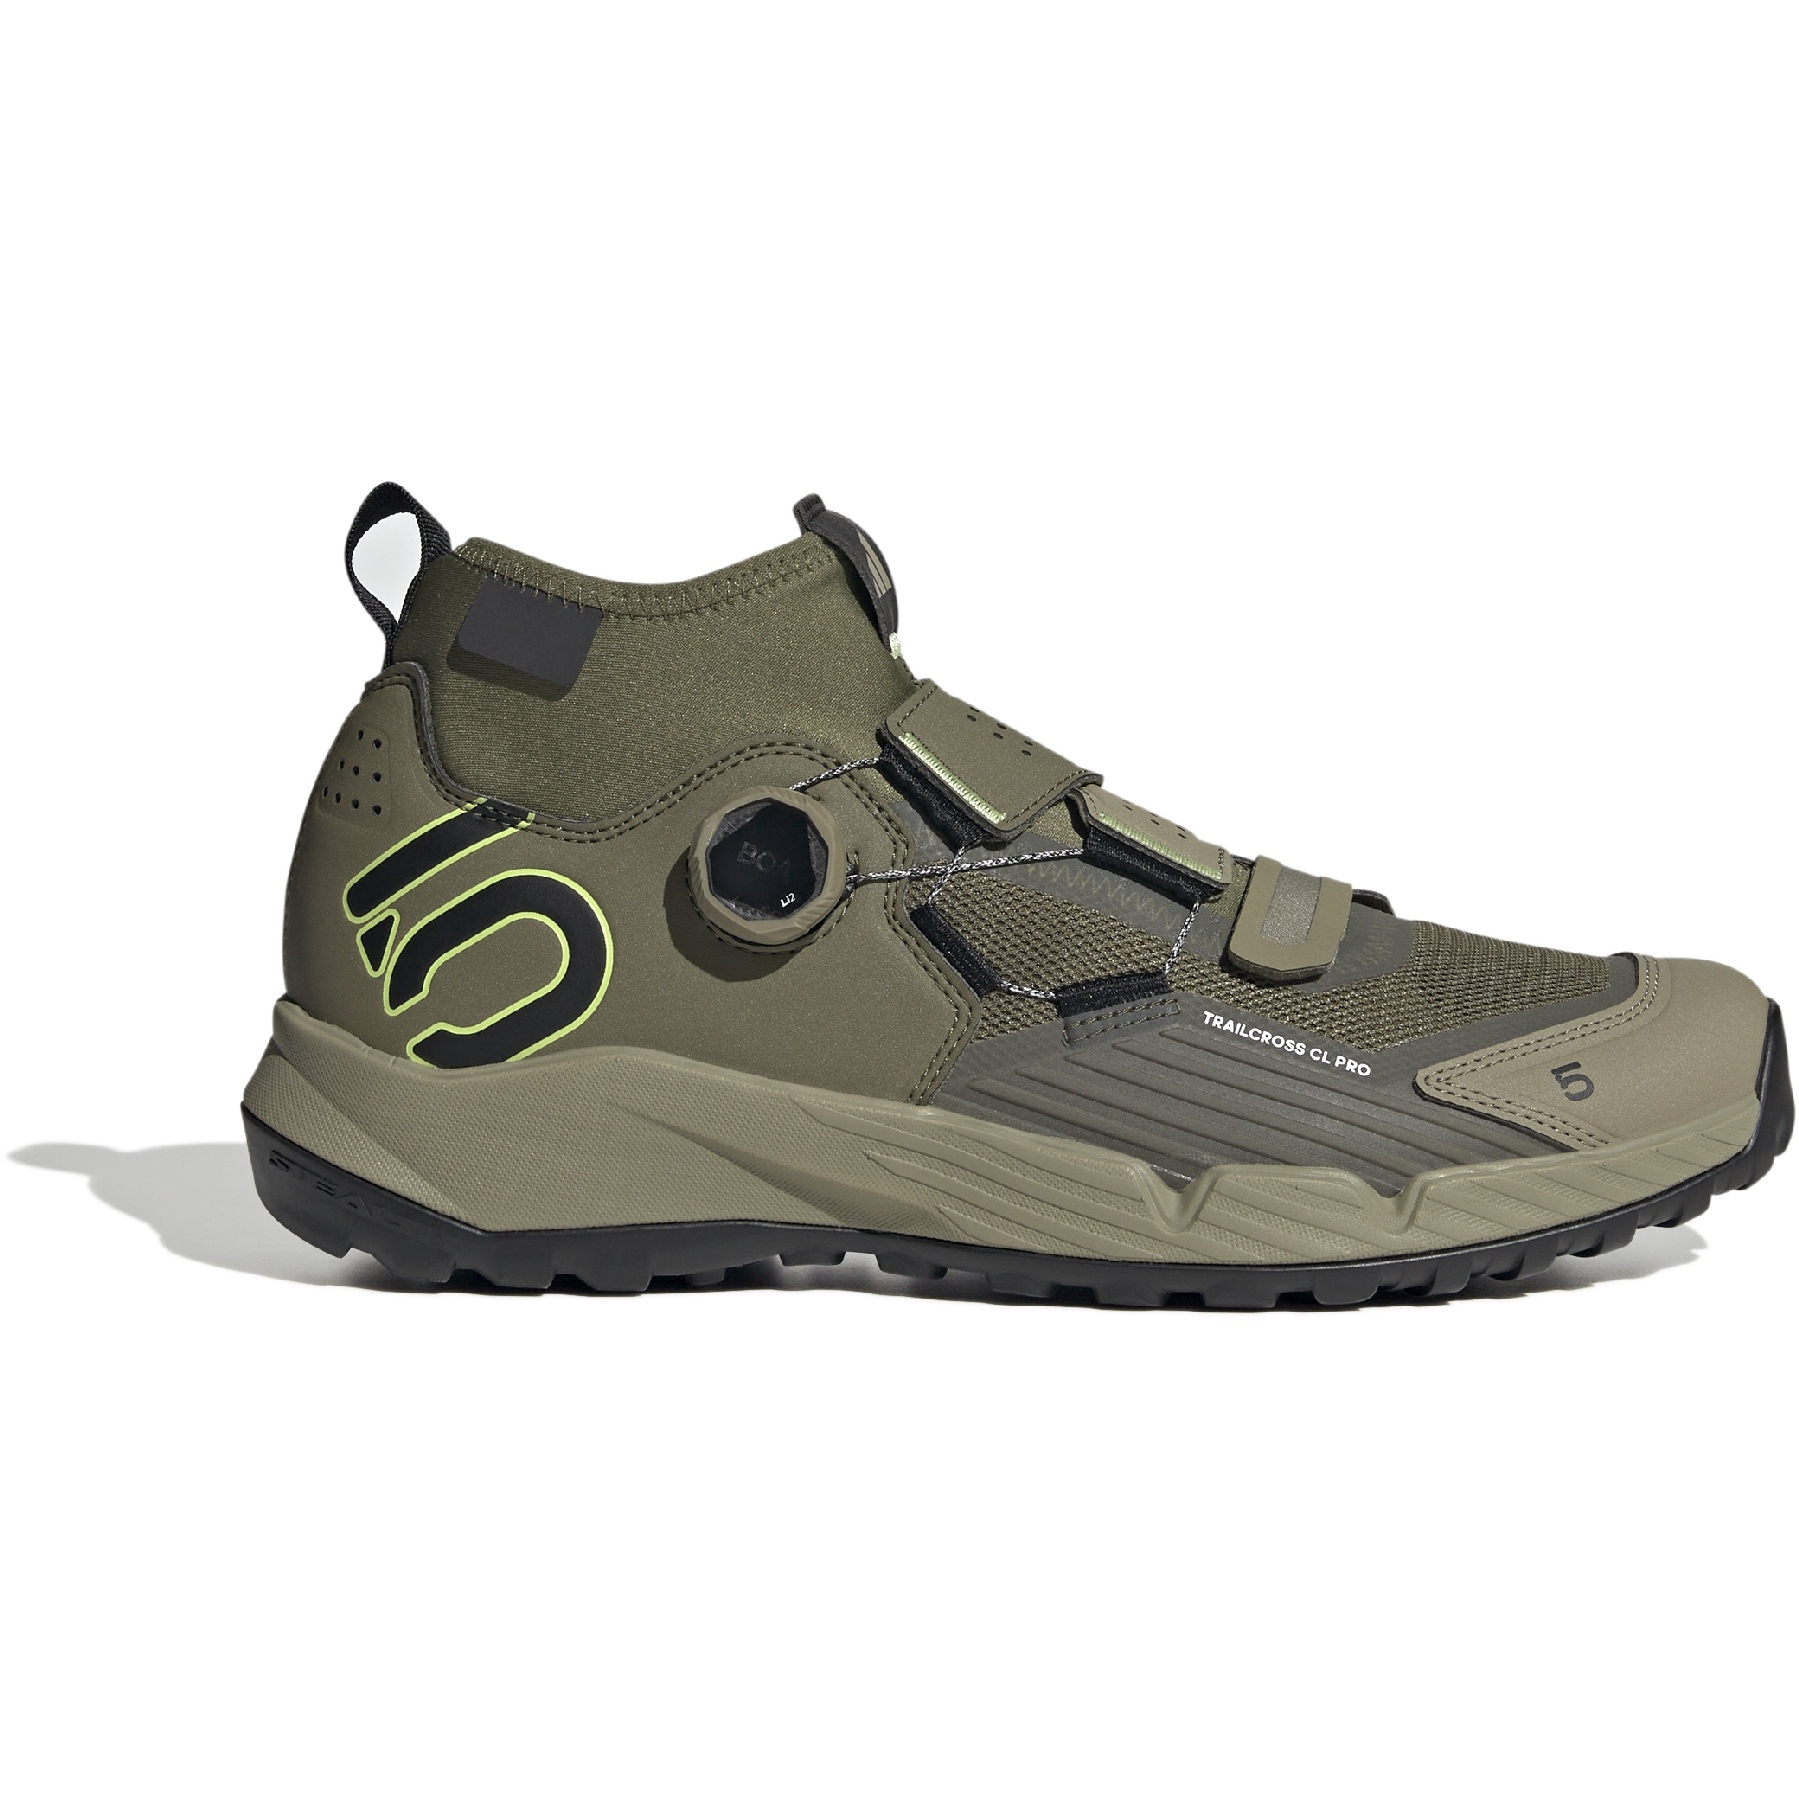 Picture of Five Ten Trailcross Pro Clip-In Mountain Bike Shoes - Focus Olive / Core Black / Orbit Green